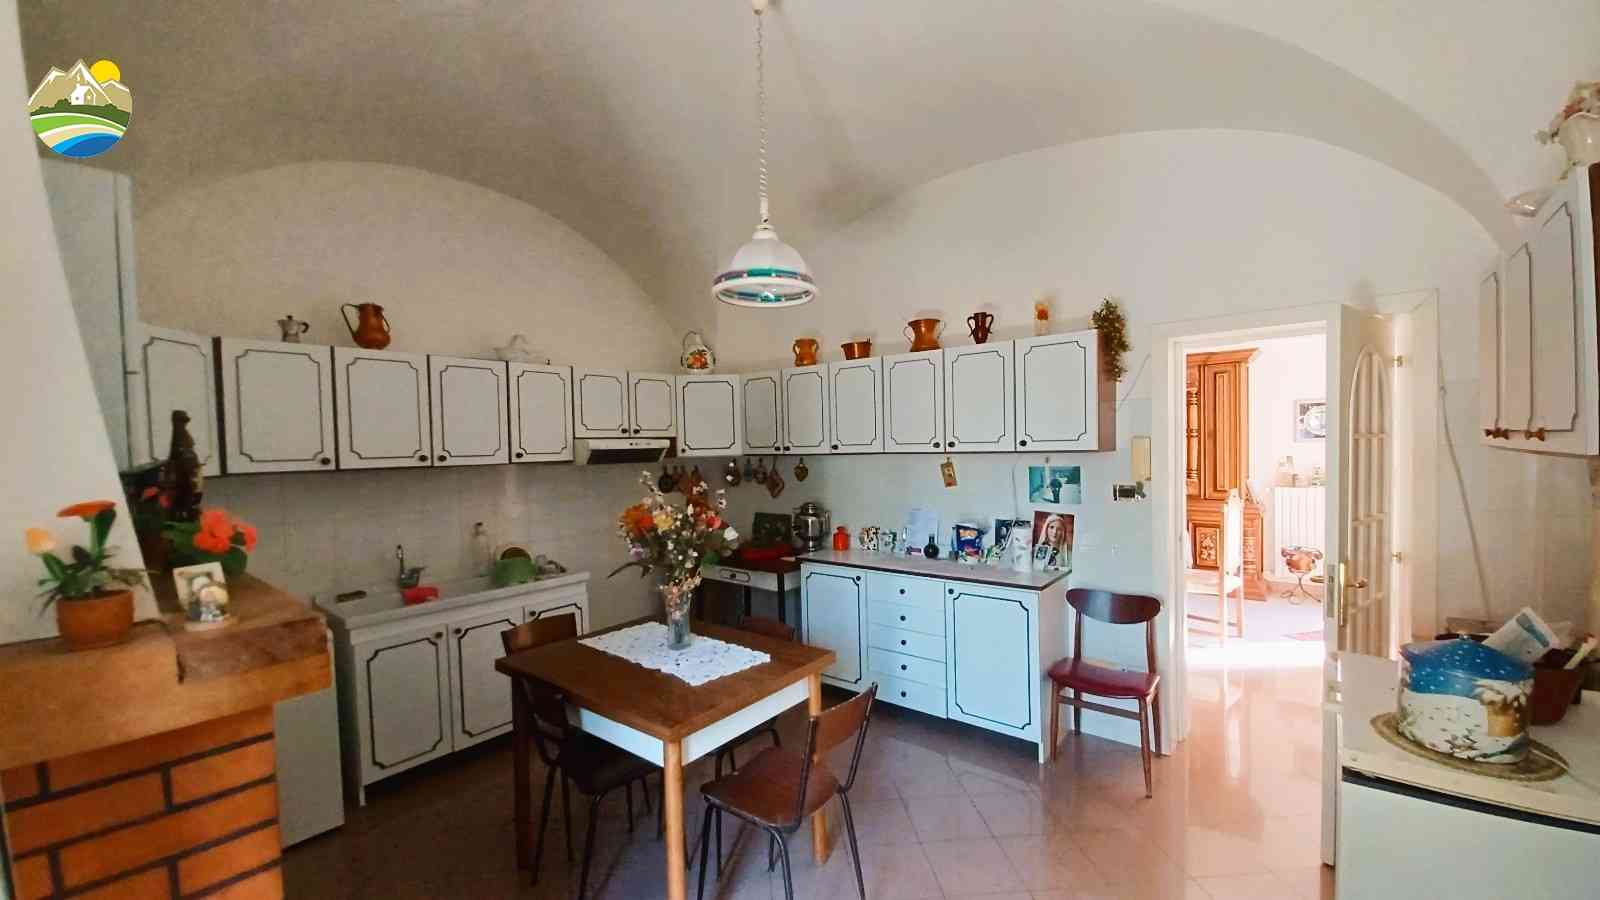 Casa in paese Casa in paese in vendita Picciano (PE), Casa Rondine - Picciano - EUR 88.783 630